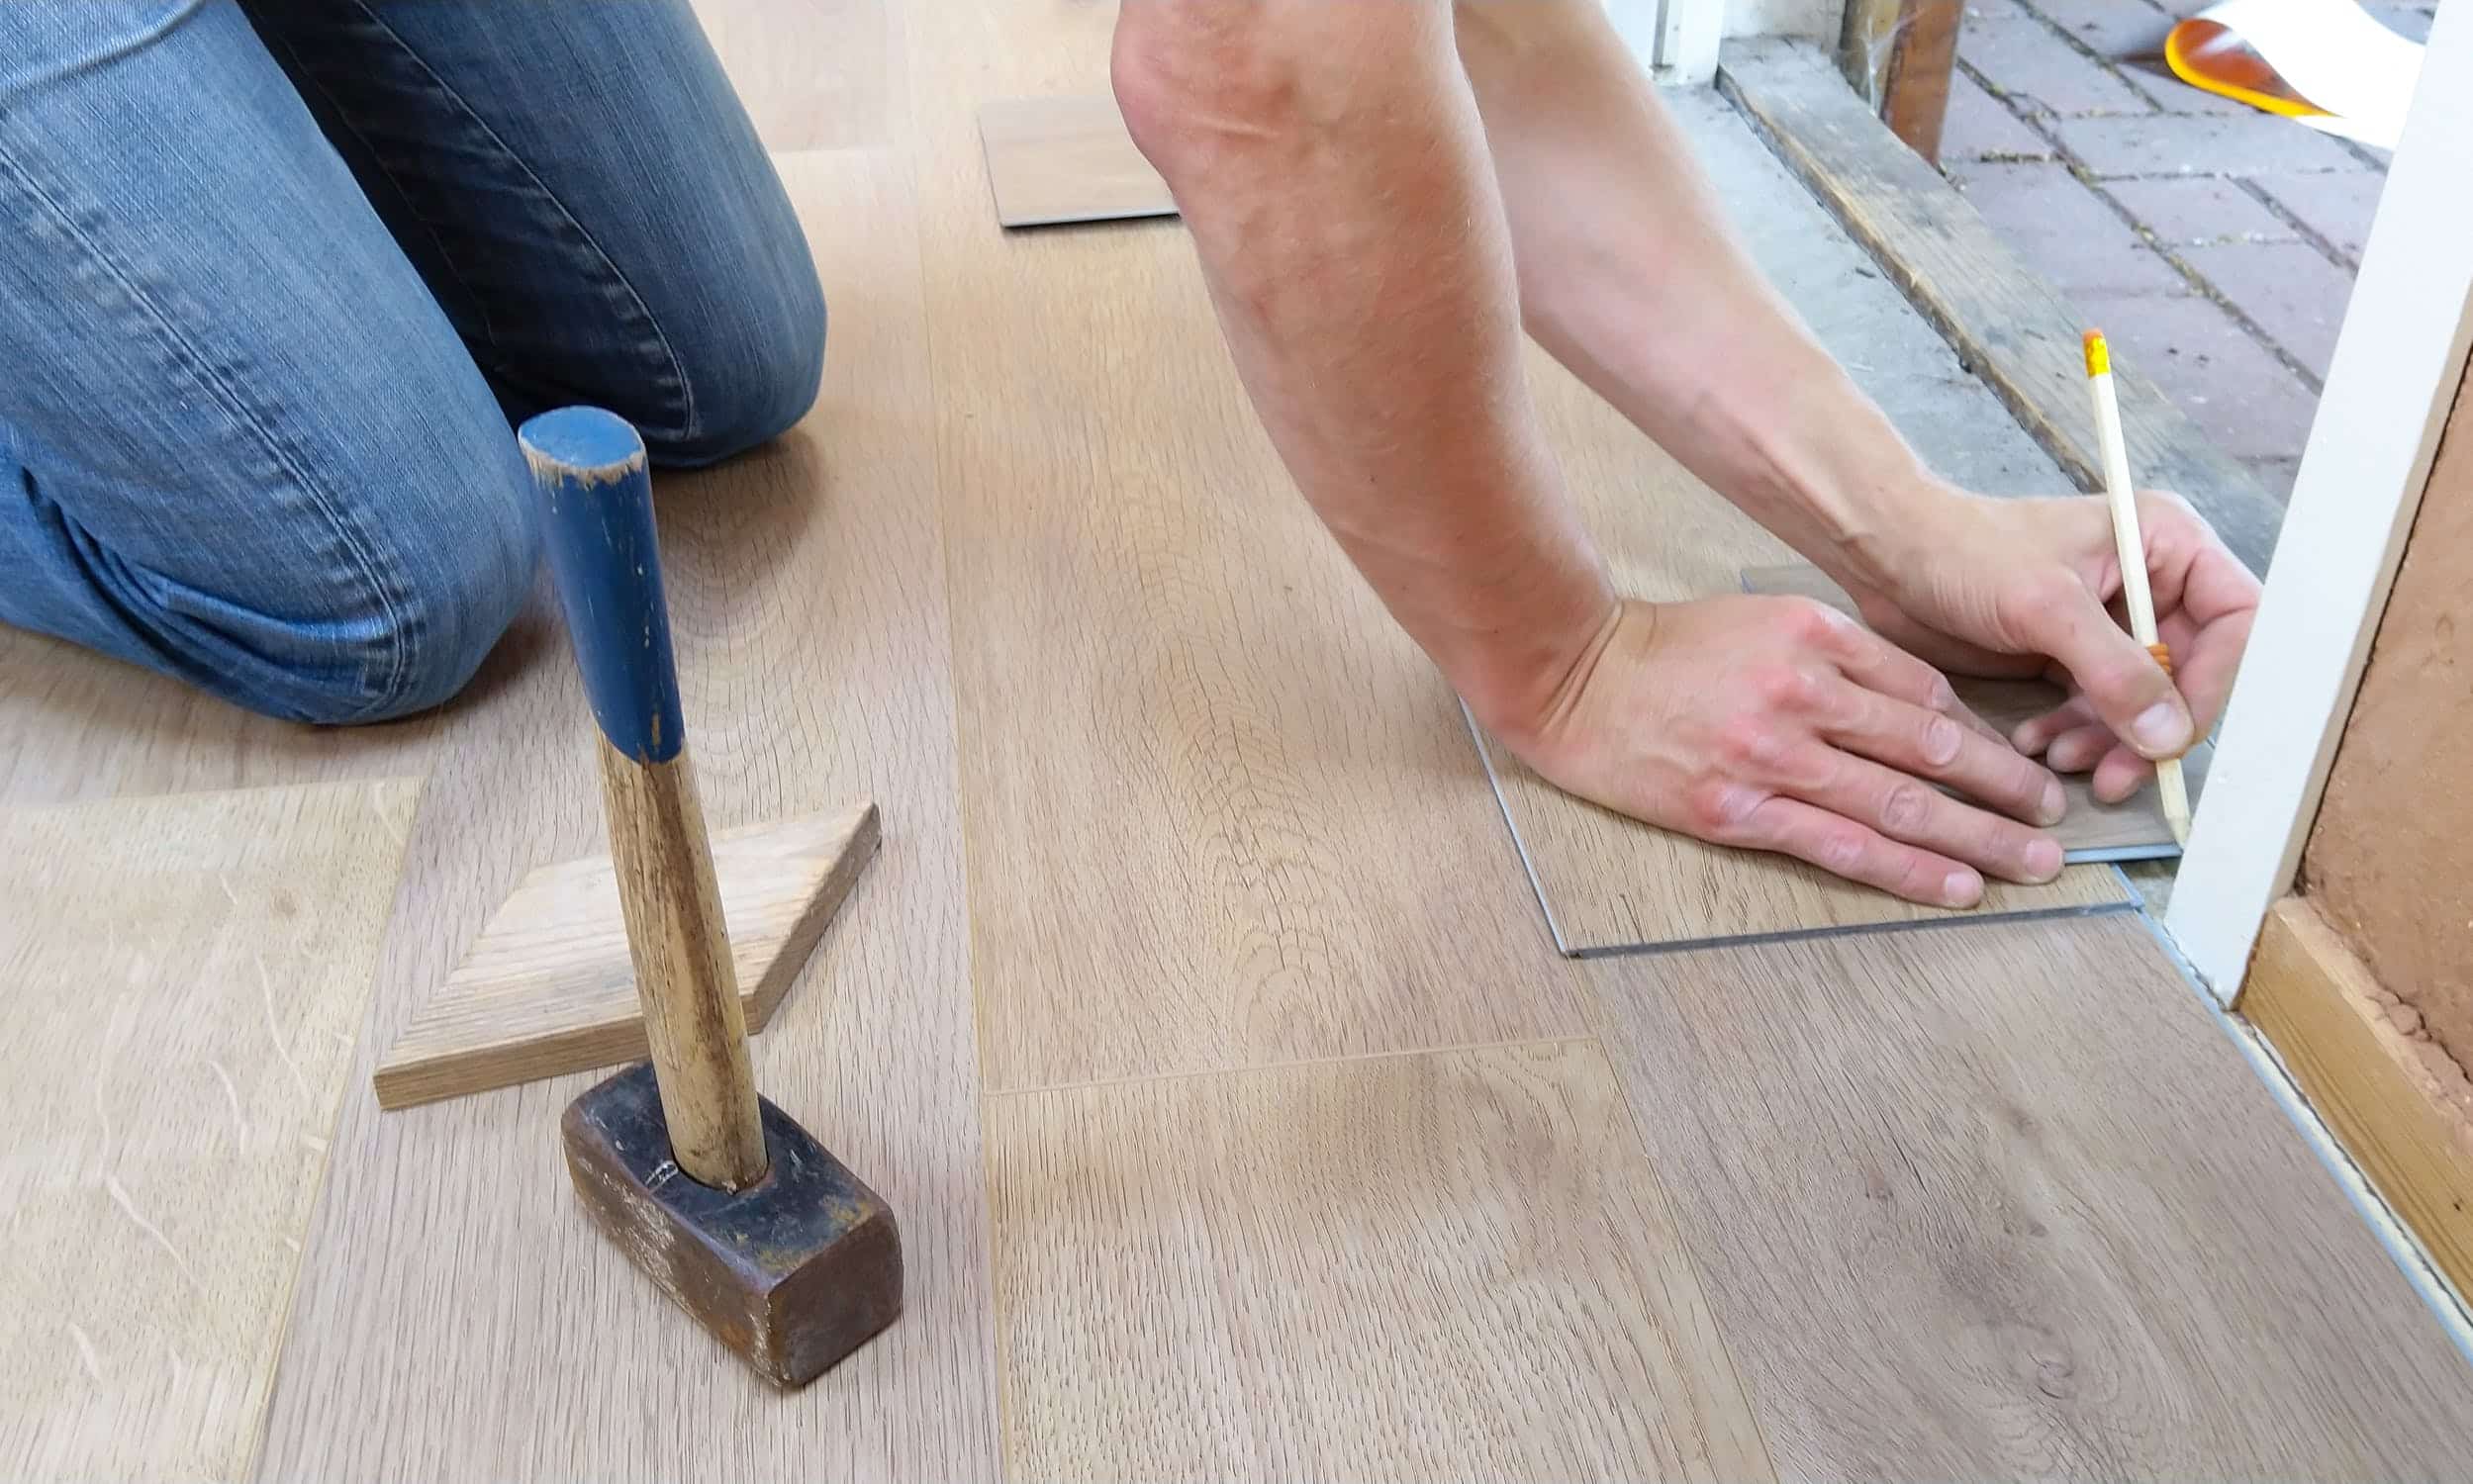 Person measuring floor material